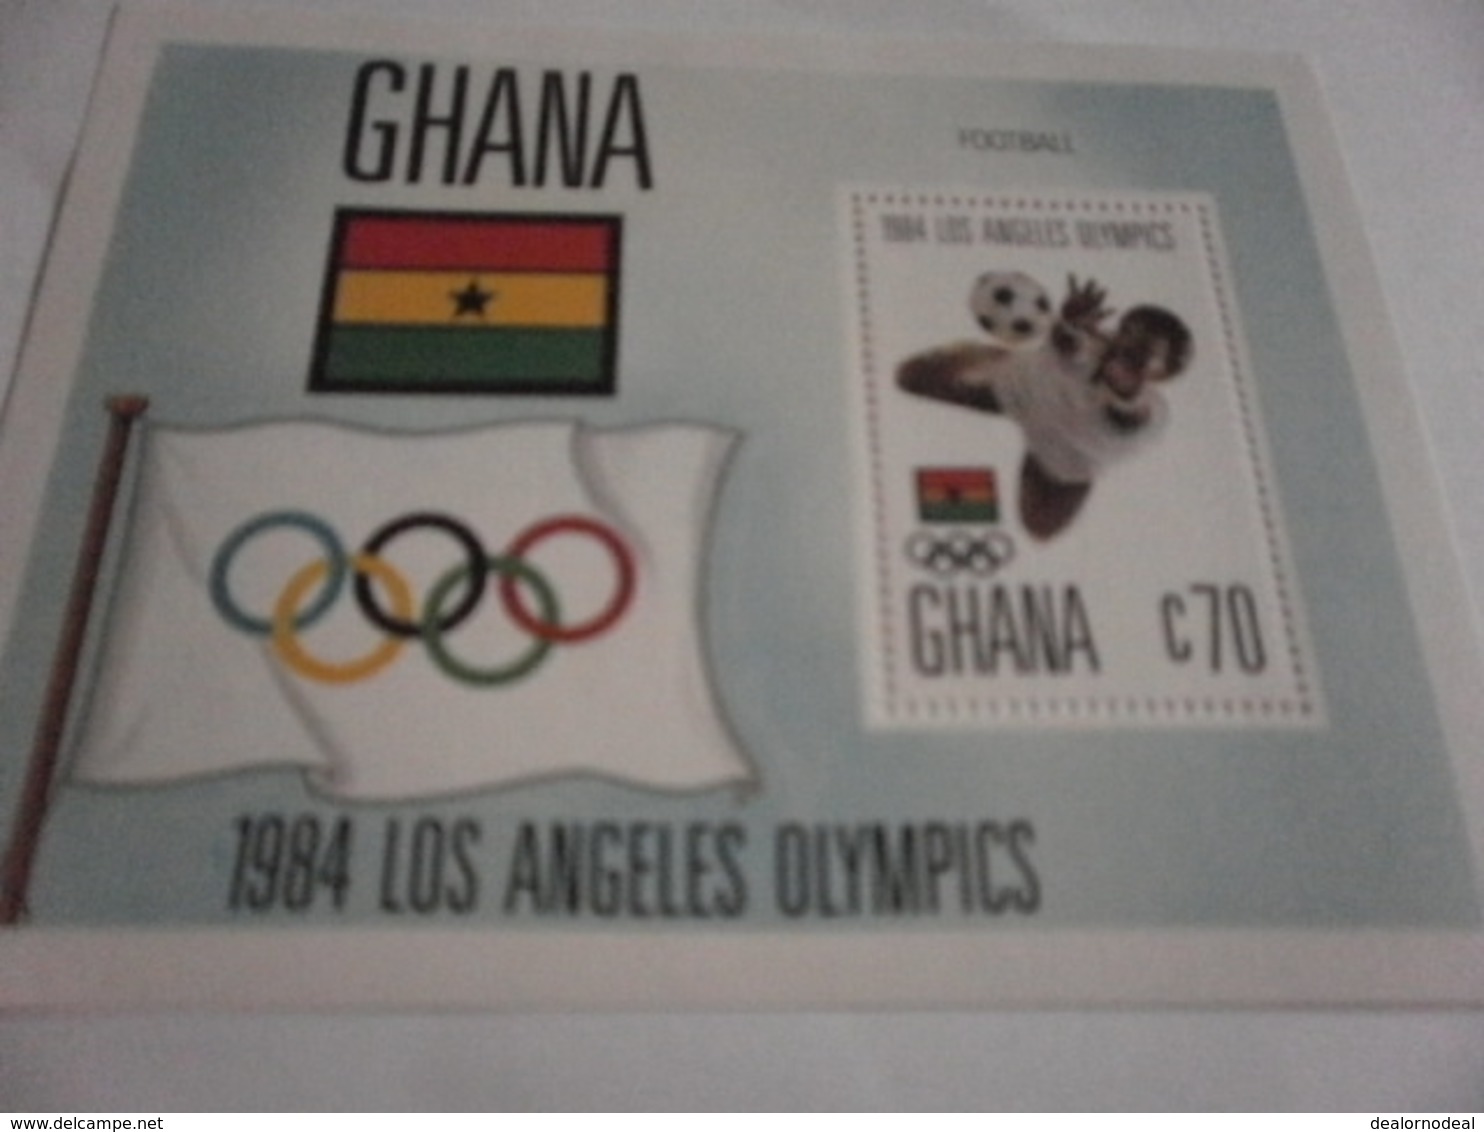 Miniature Sheet Perf  1984 Olympics Football - Ghana (1957-...)